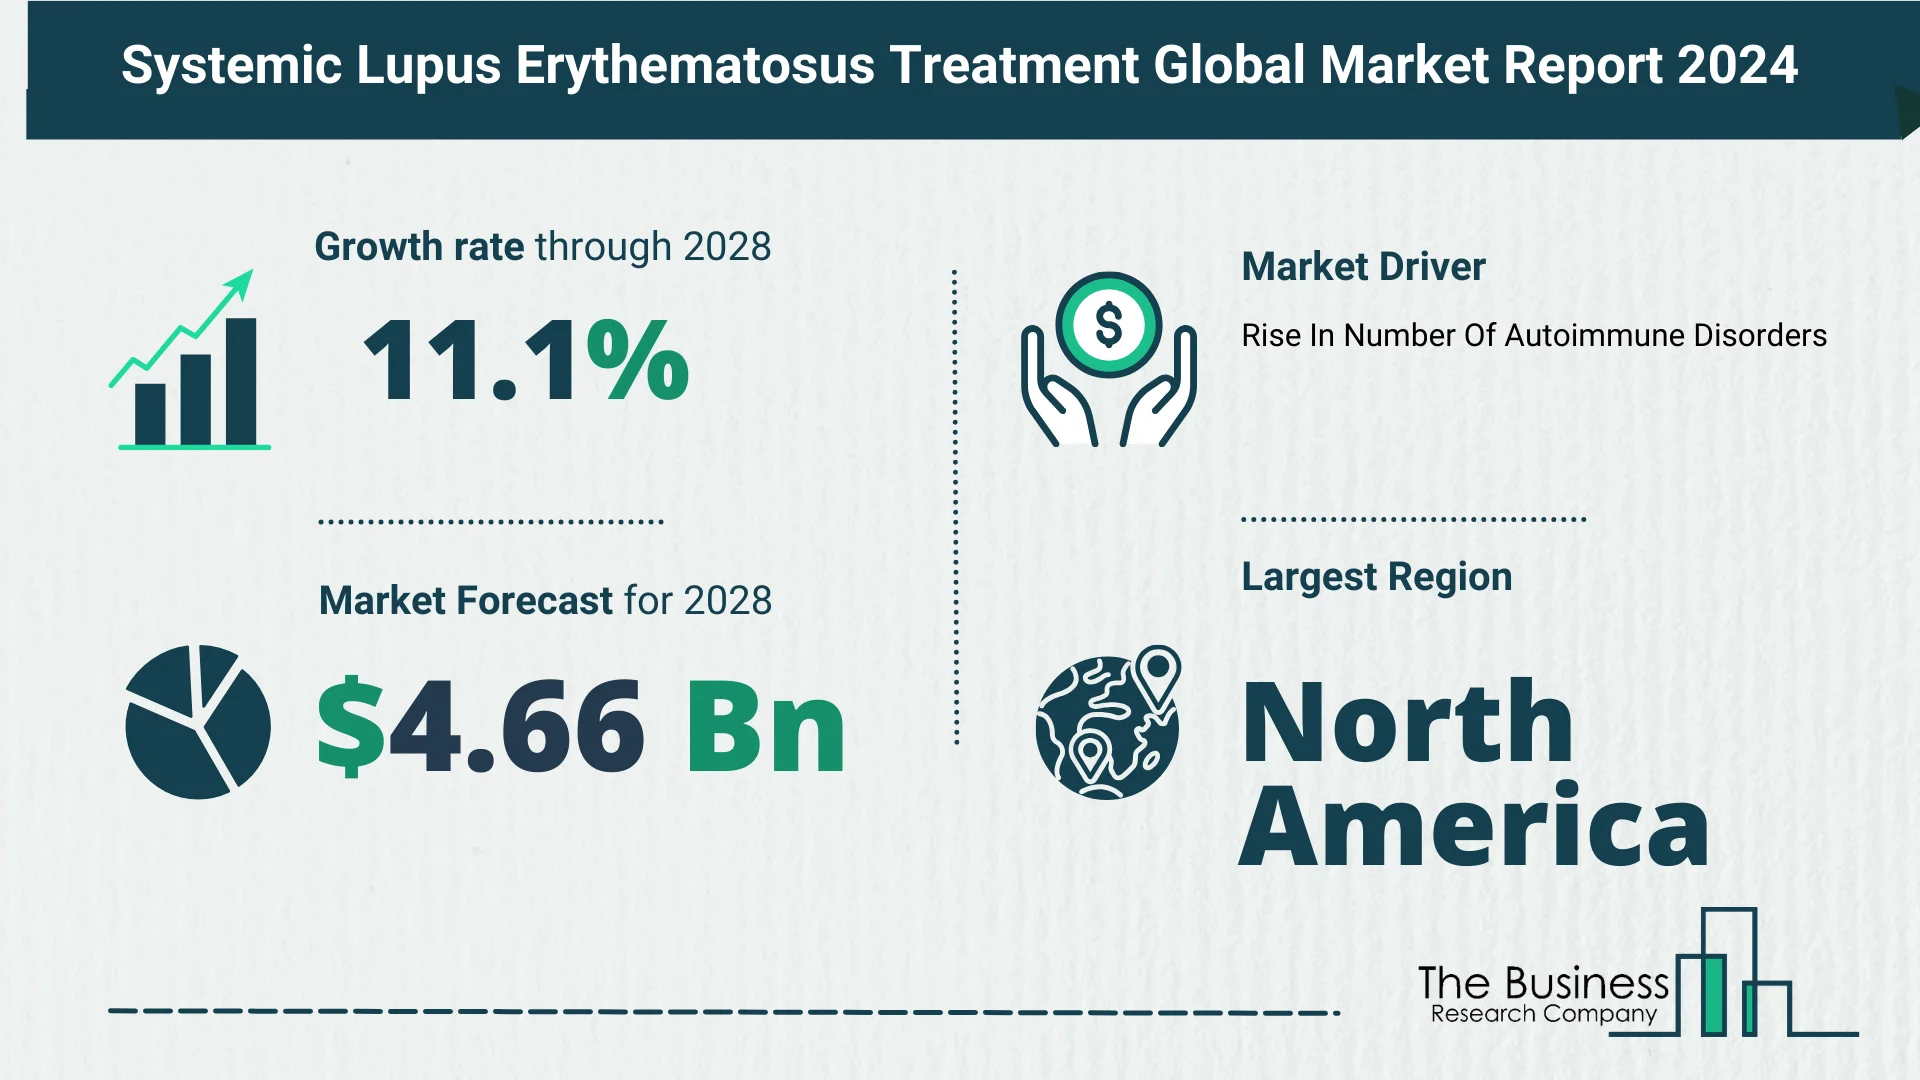 Global Systemic Lupus Erythematosus Treatment Market Size